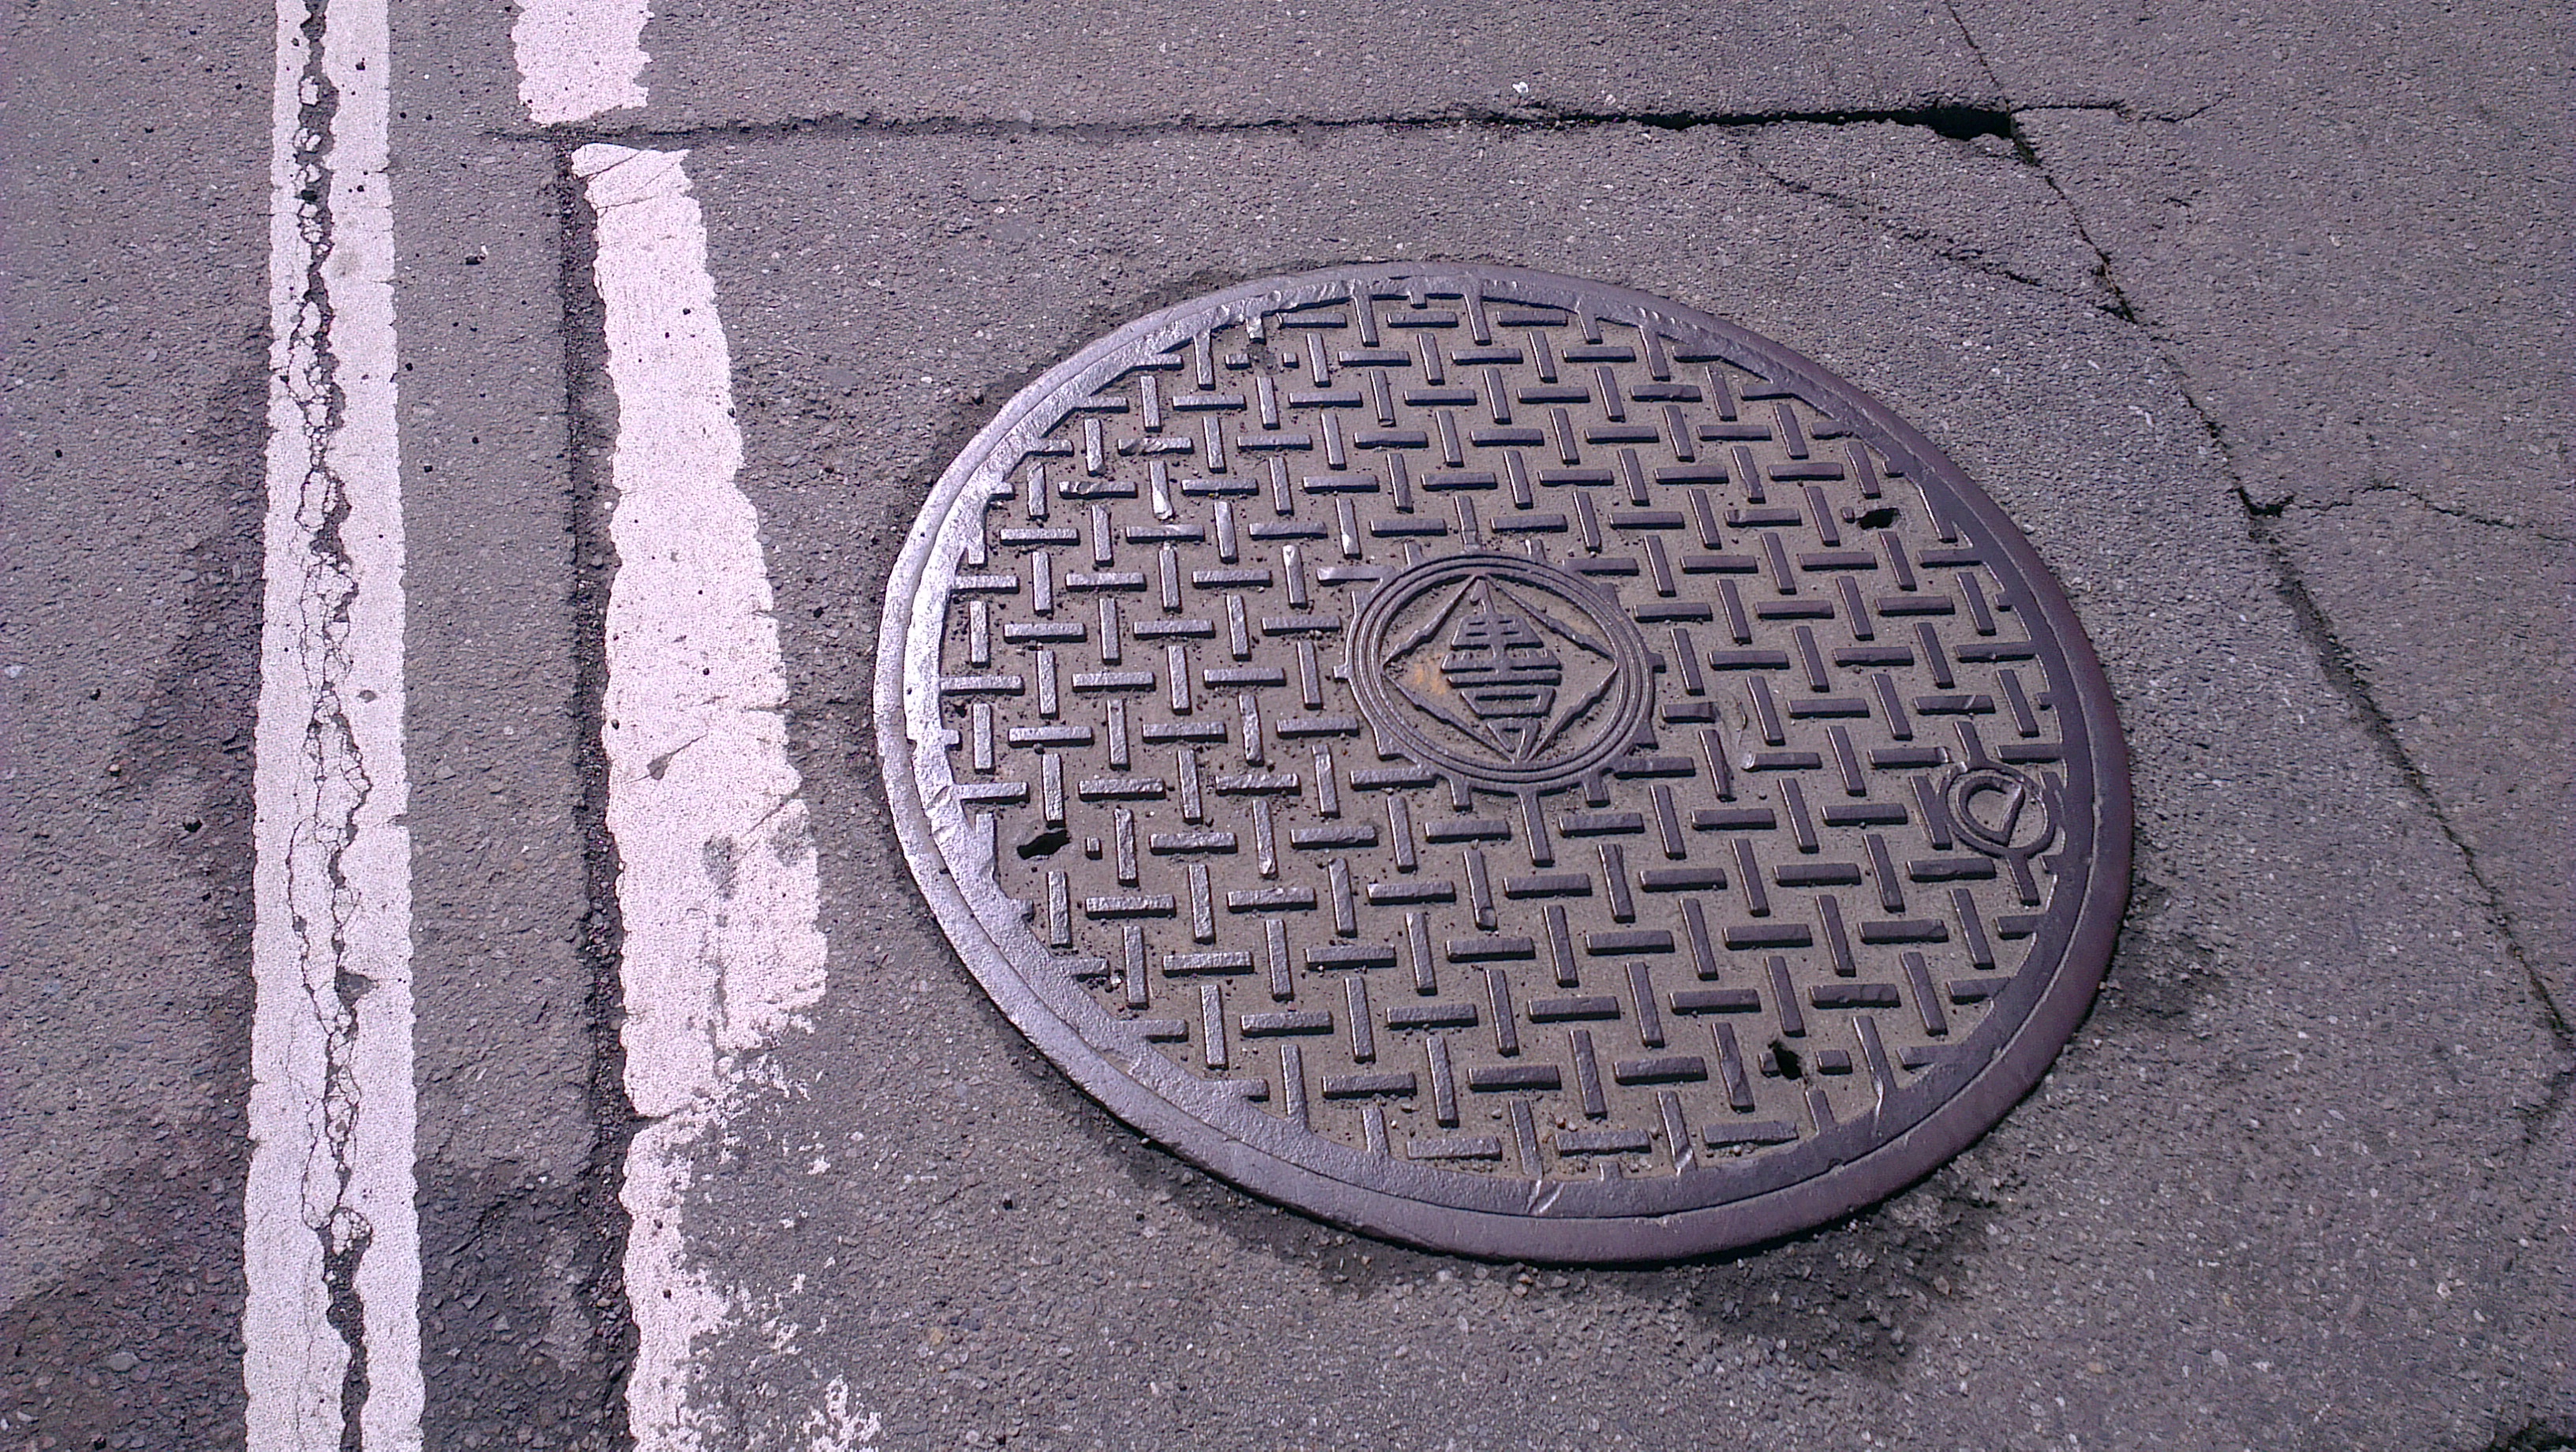 File:Taiwan Power Company Circle manhole cover.jpg - Wikimedia Commons